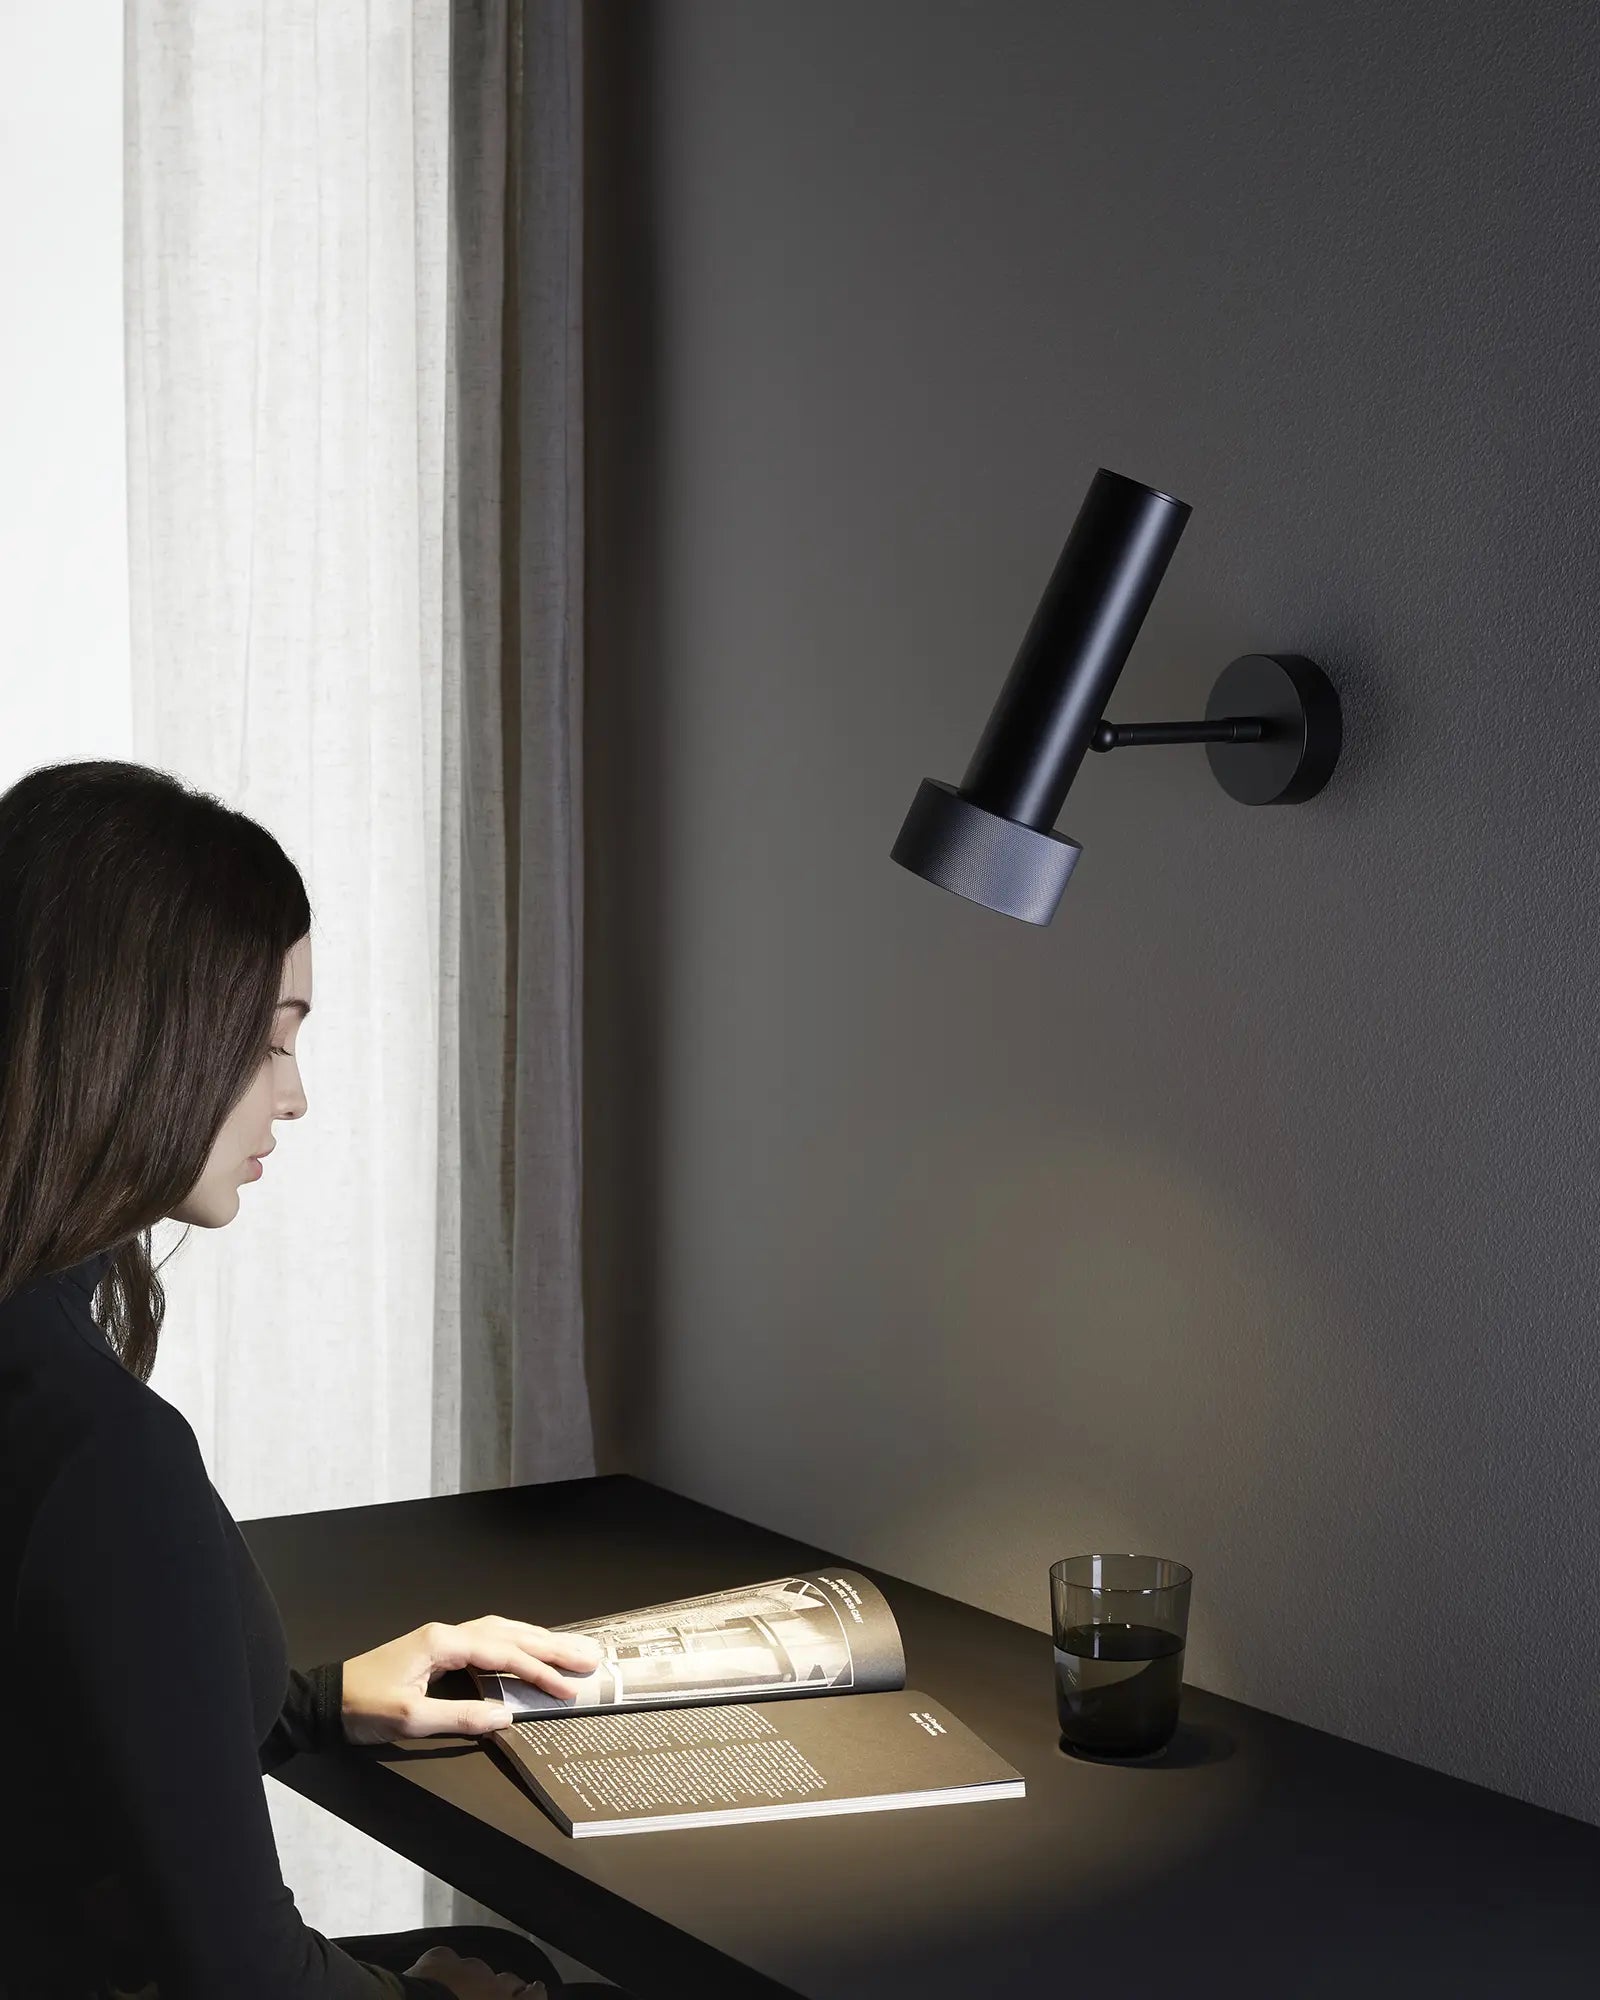 Focus wall light adjustable over a desk